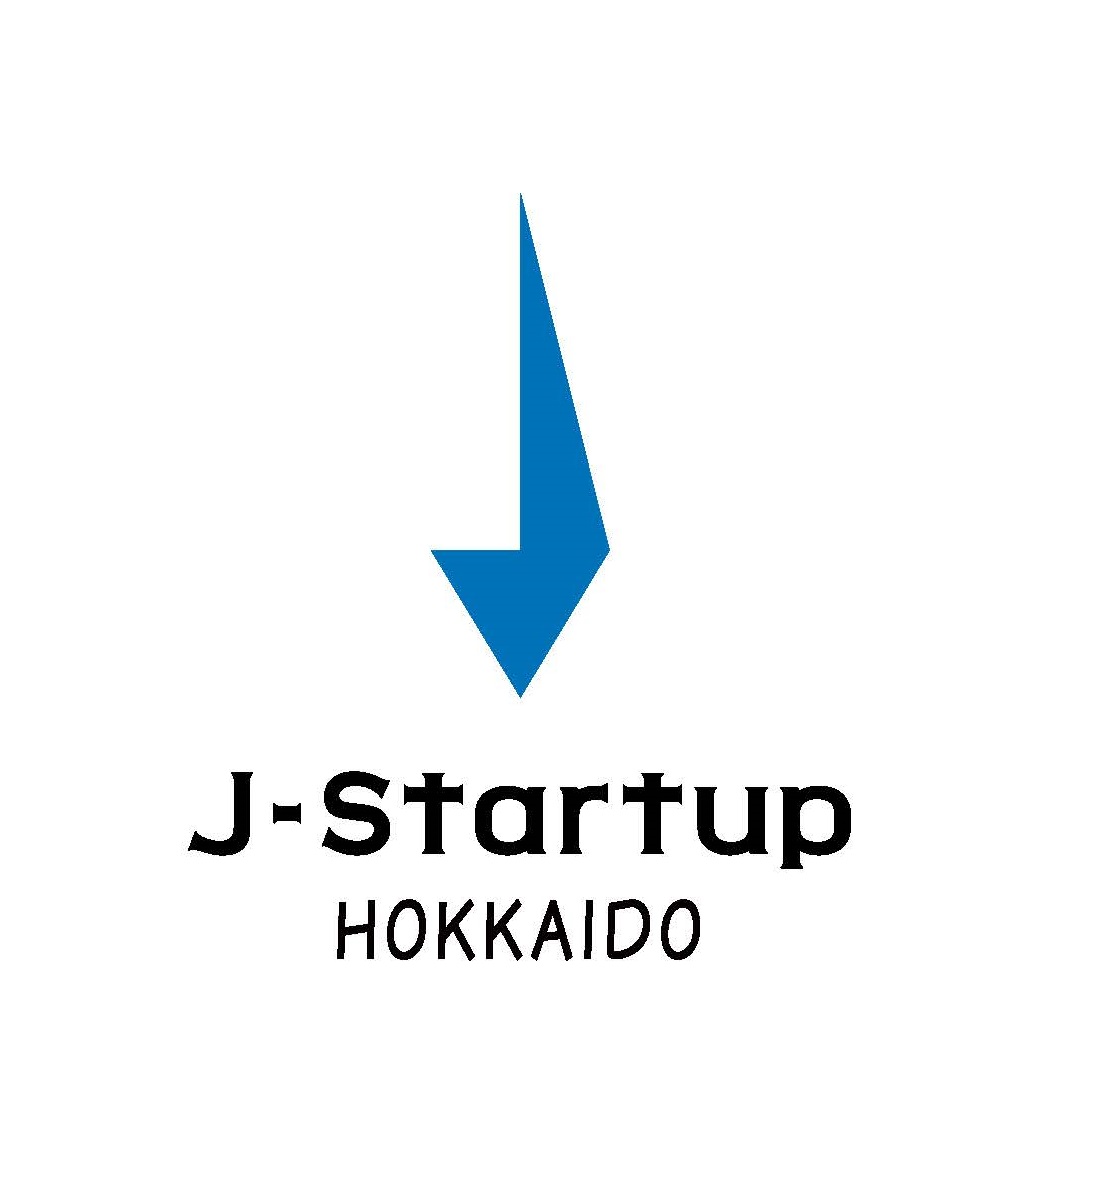 J-Startup HOKKAIDO、宇宙スタートアップのLetara含む9社を追加選定